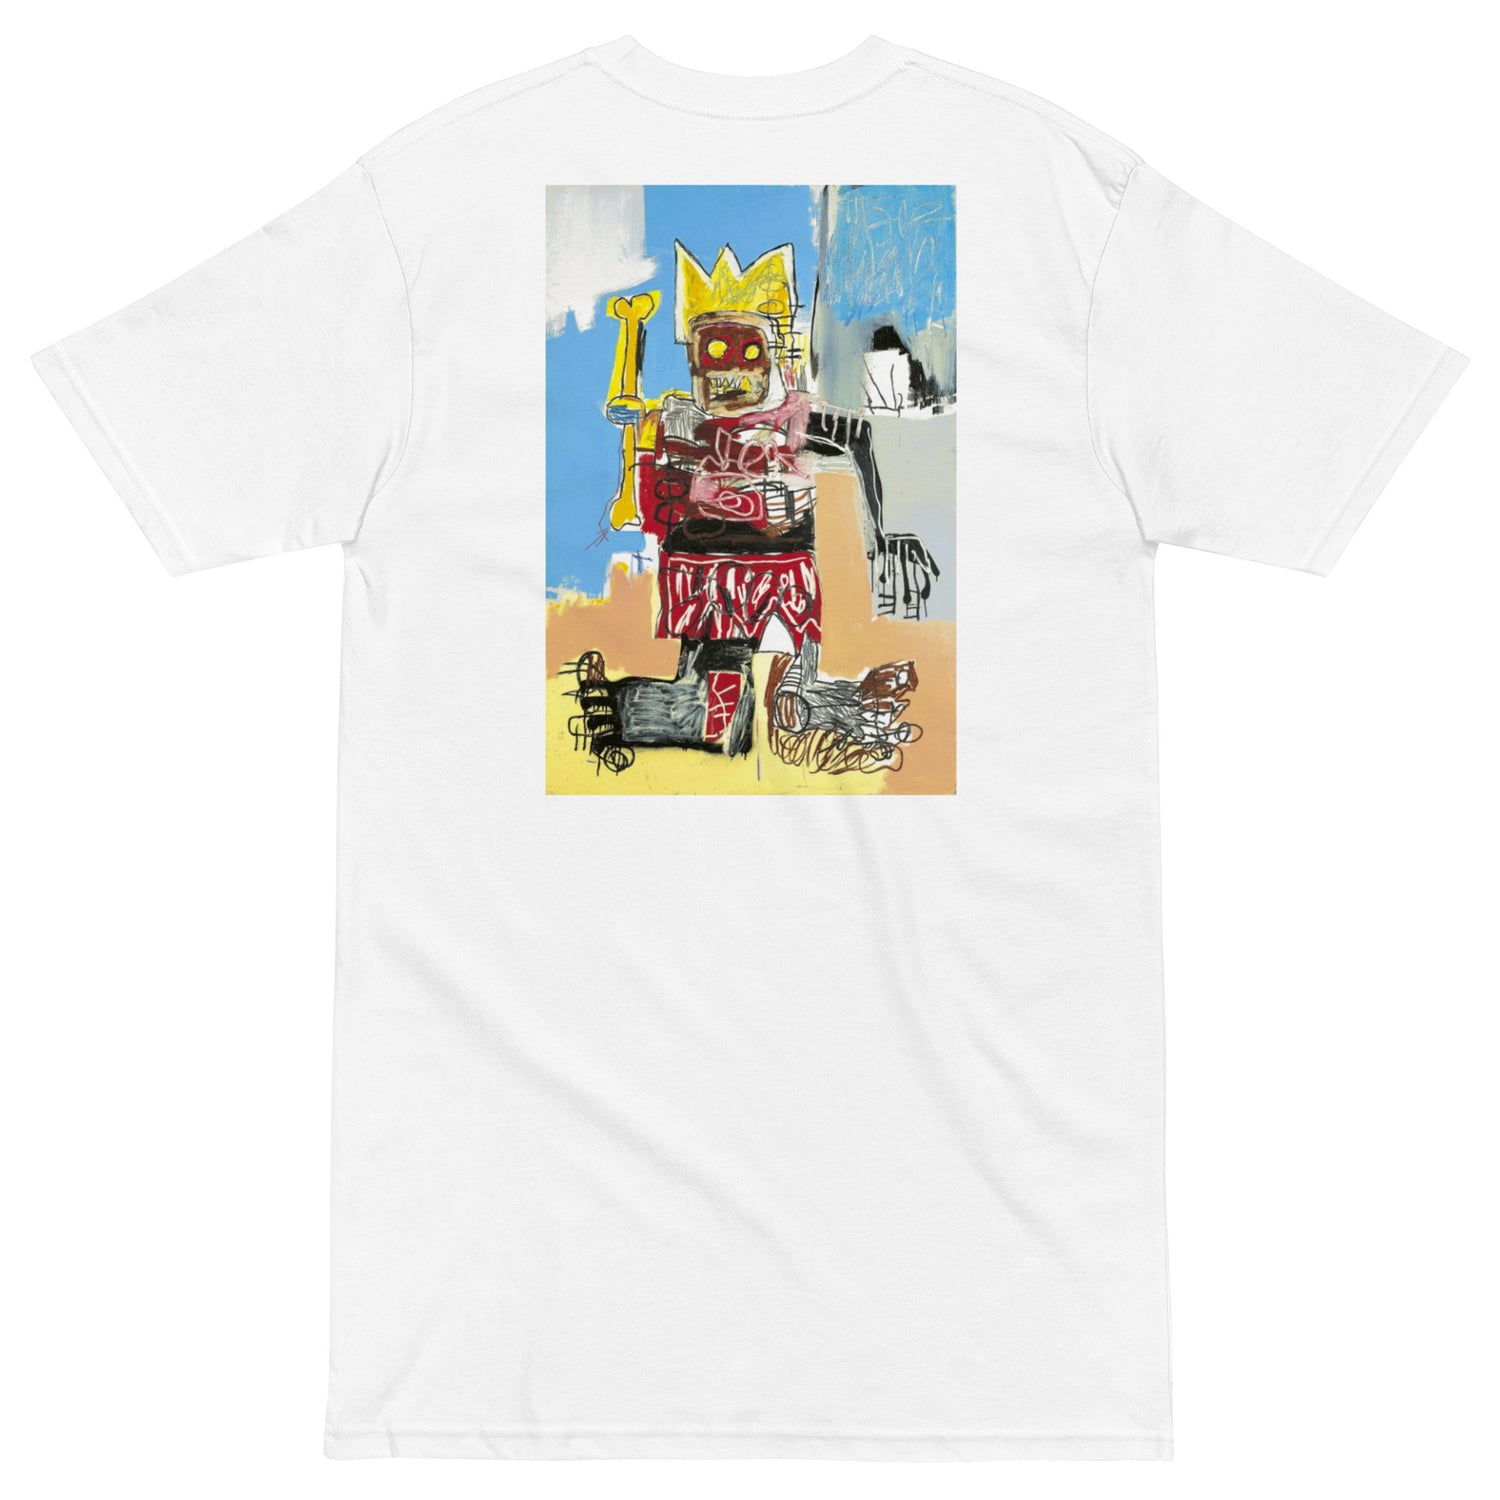 Jean-Michel Basquiat "Untitled" 1982 Artwork Embroidered + Printed Premium Streetwear T-shirt White